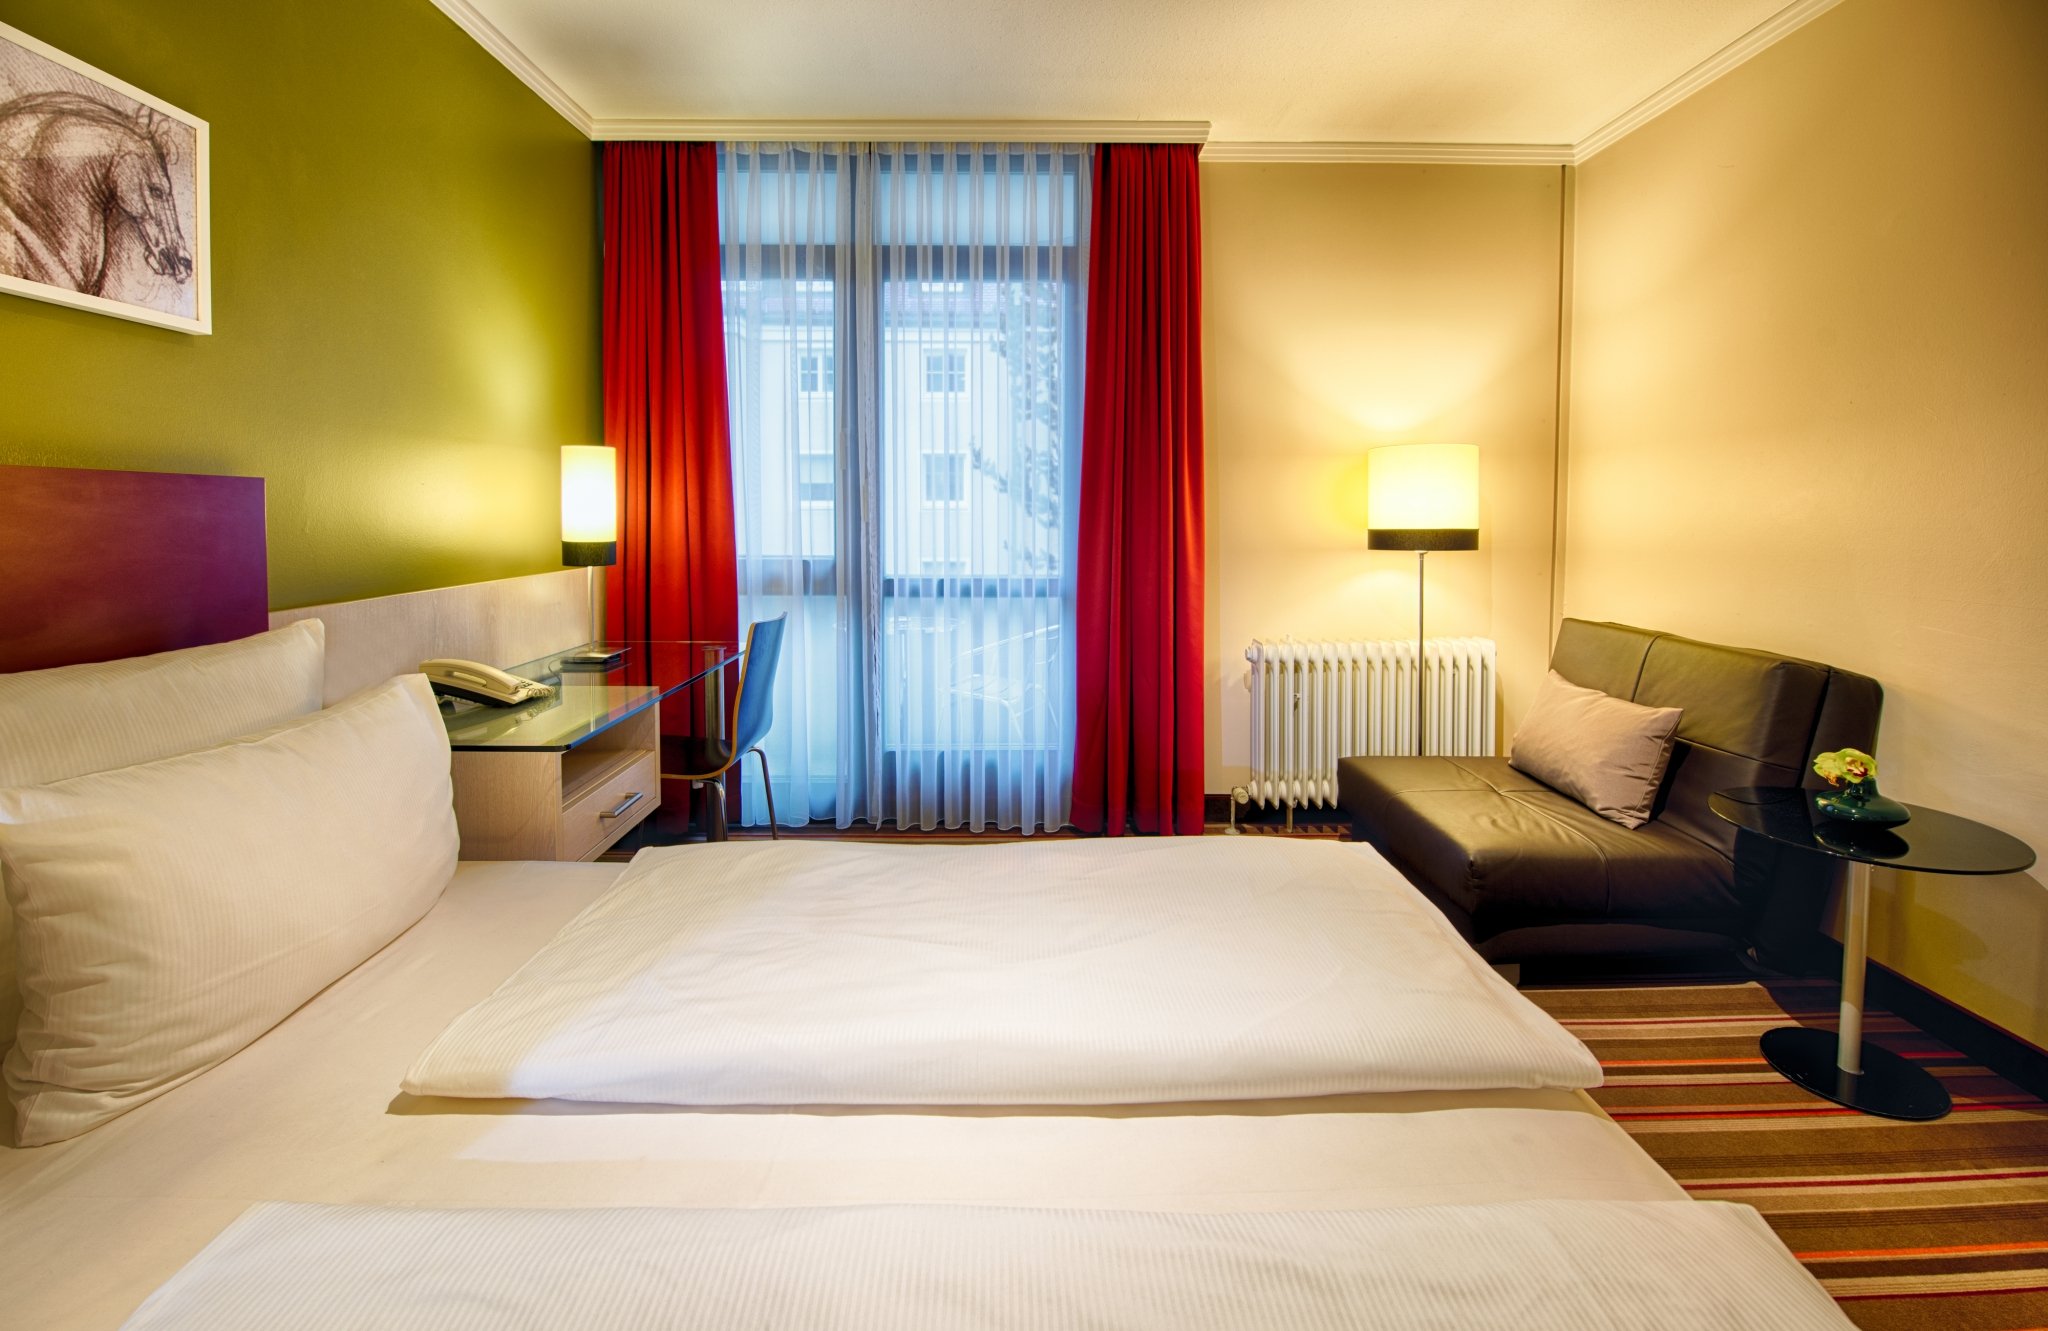 Leonardo Hotel & Residenz München - Comfort Room